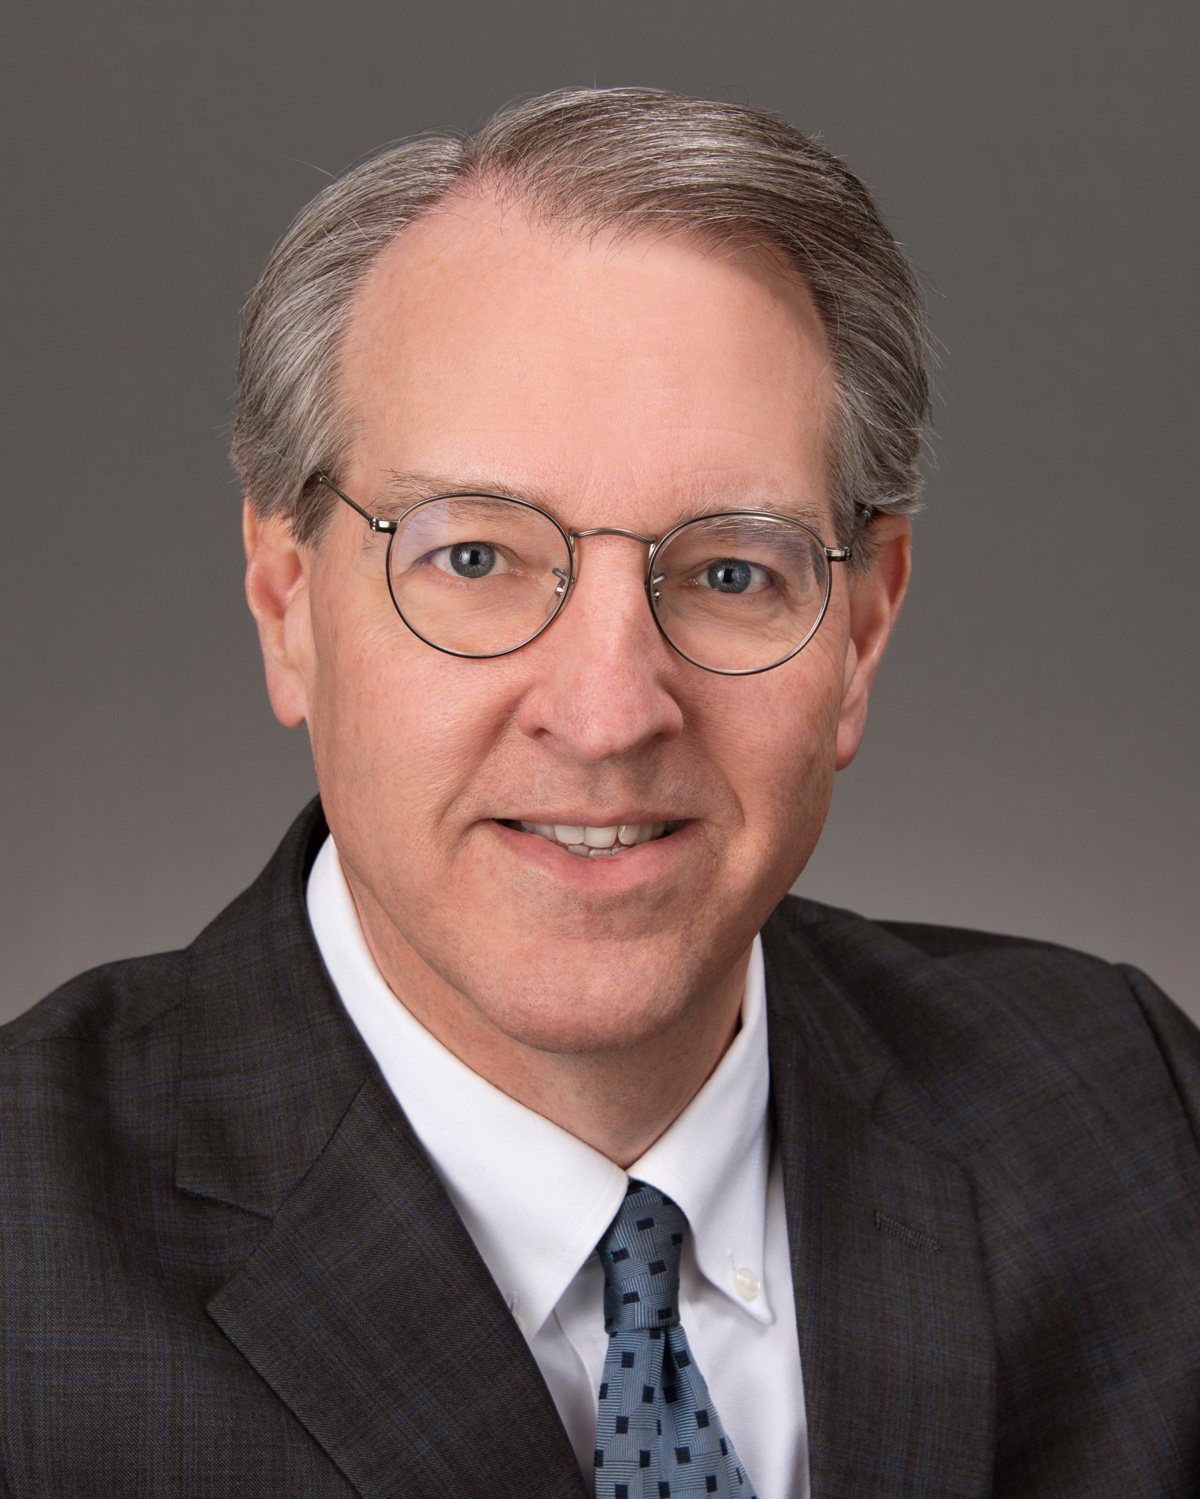  senator Matt Pierce